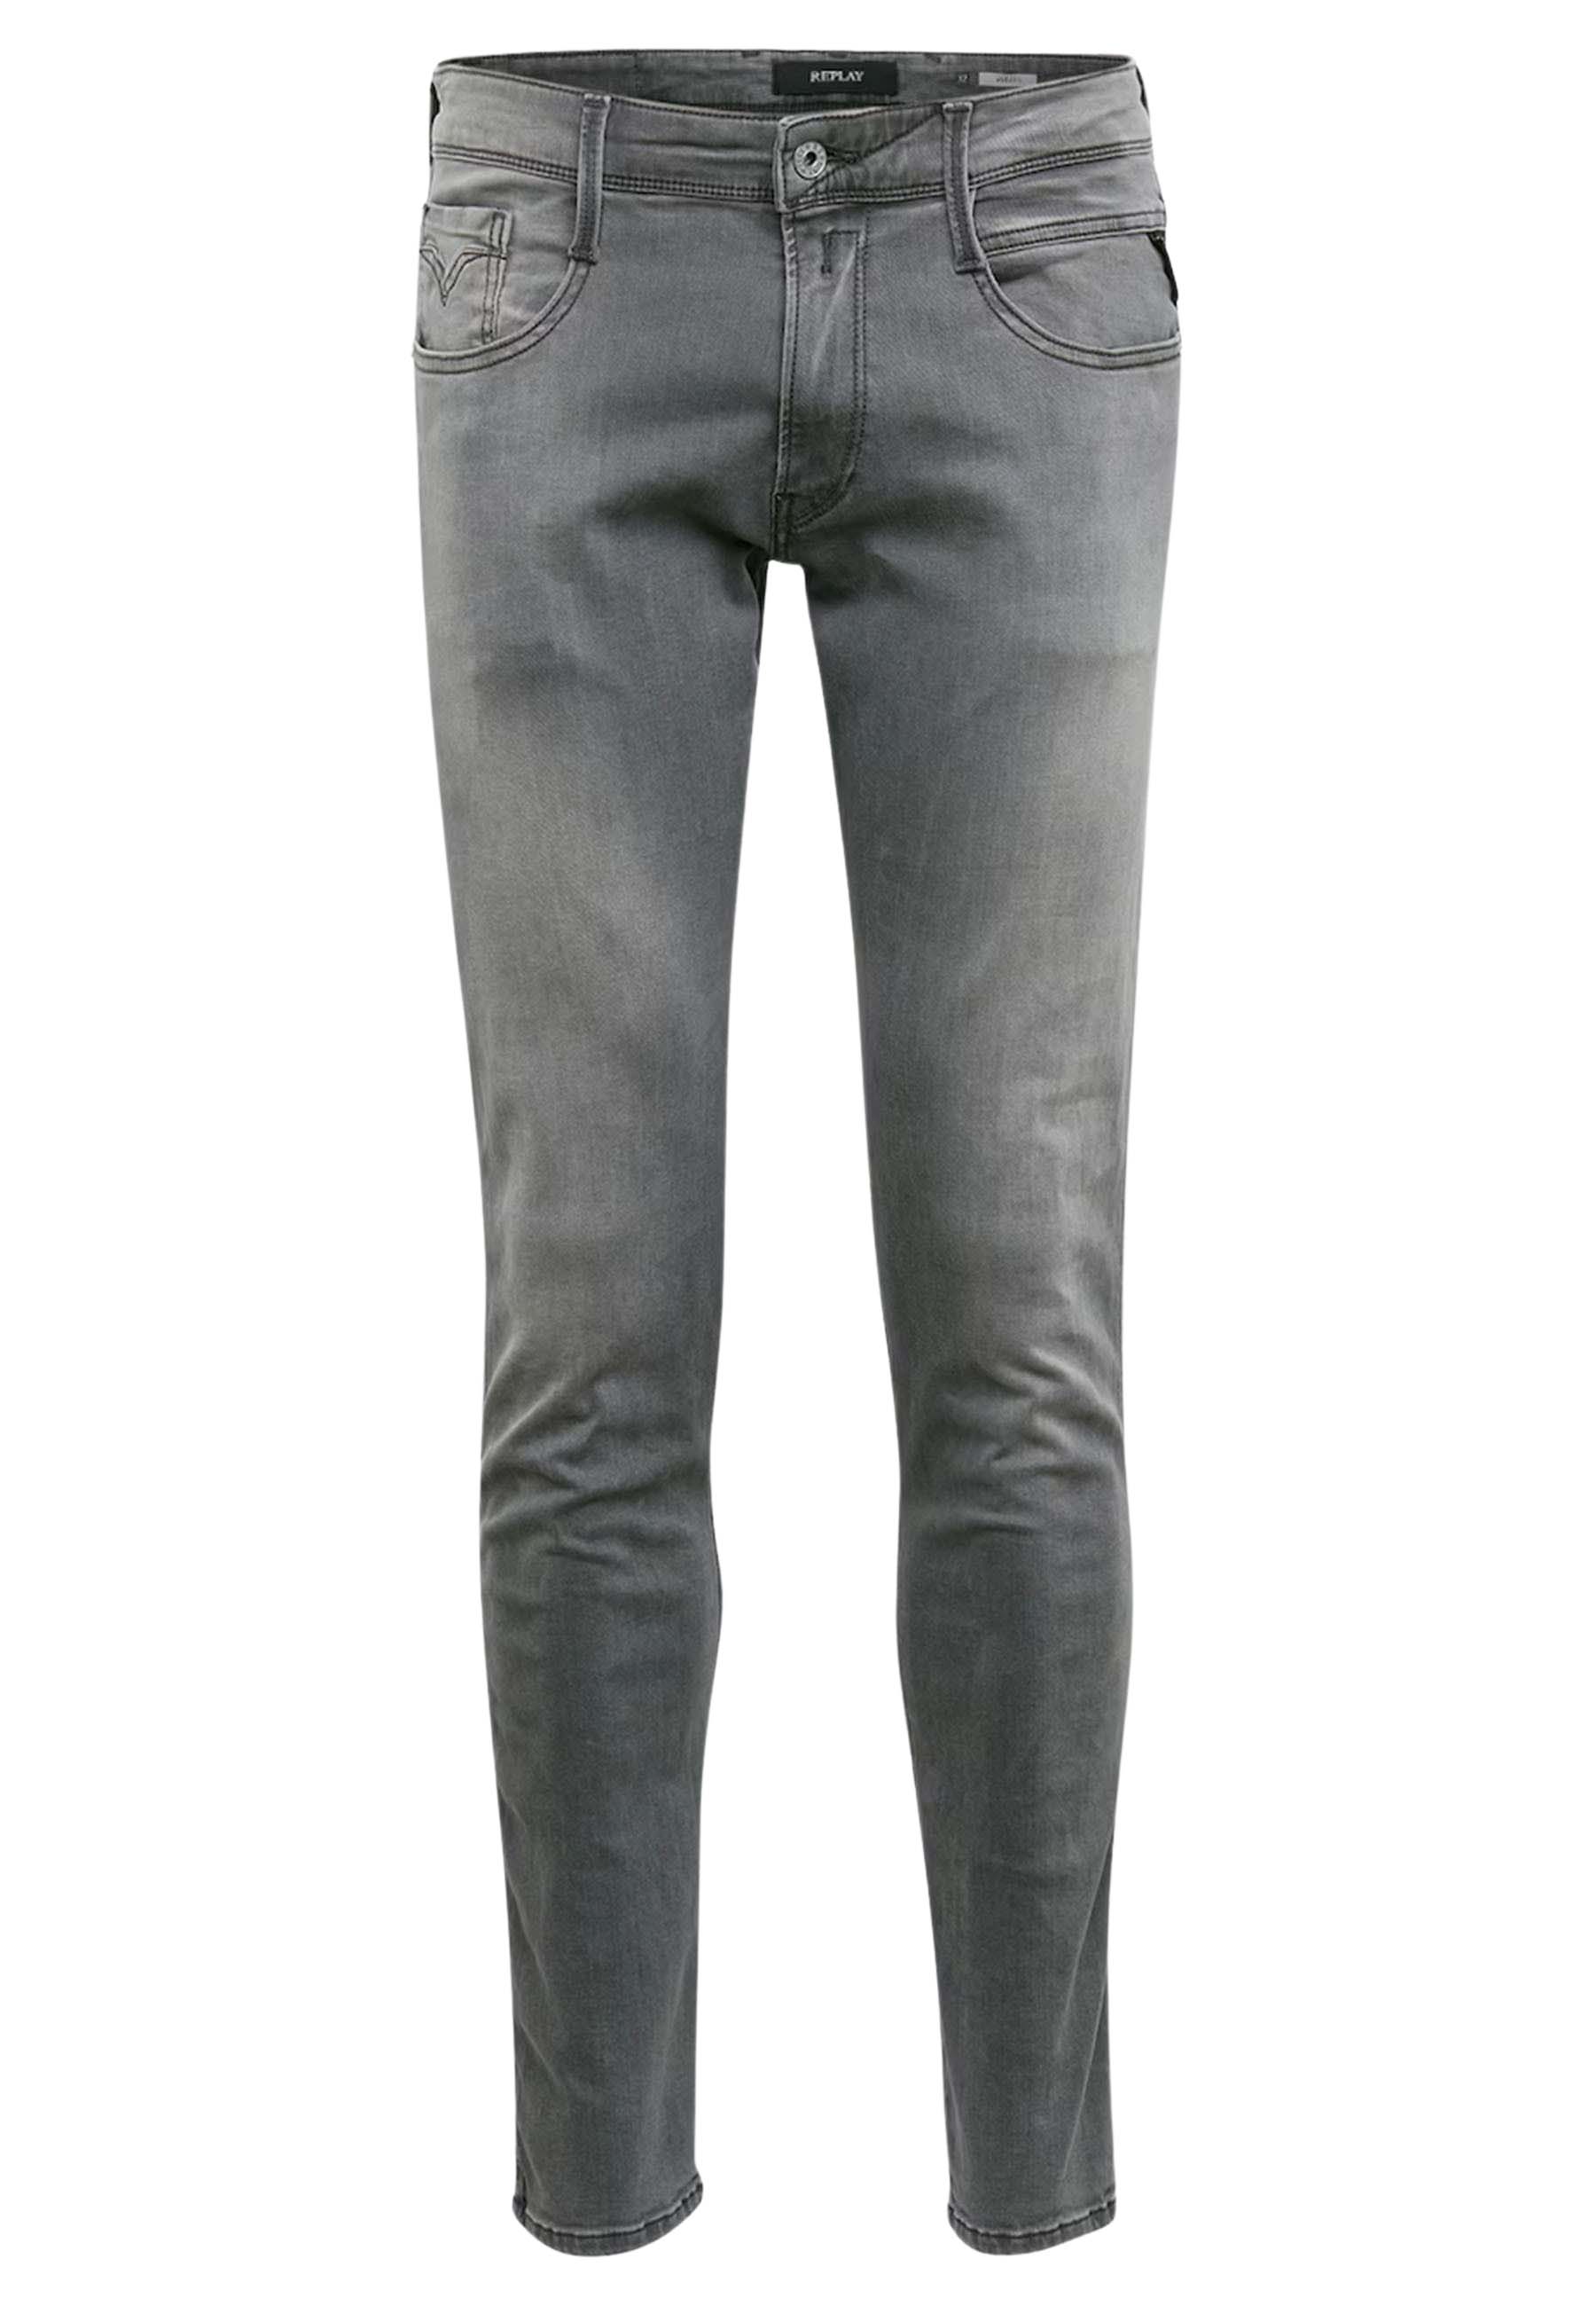 Replay Anbass jeans grijs Heren maat 36/32